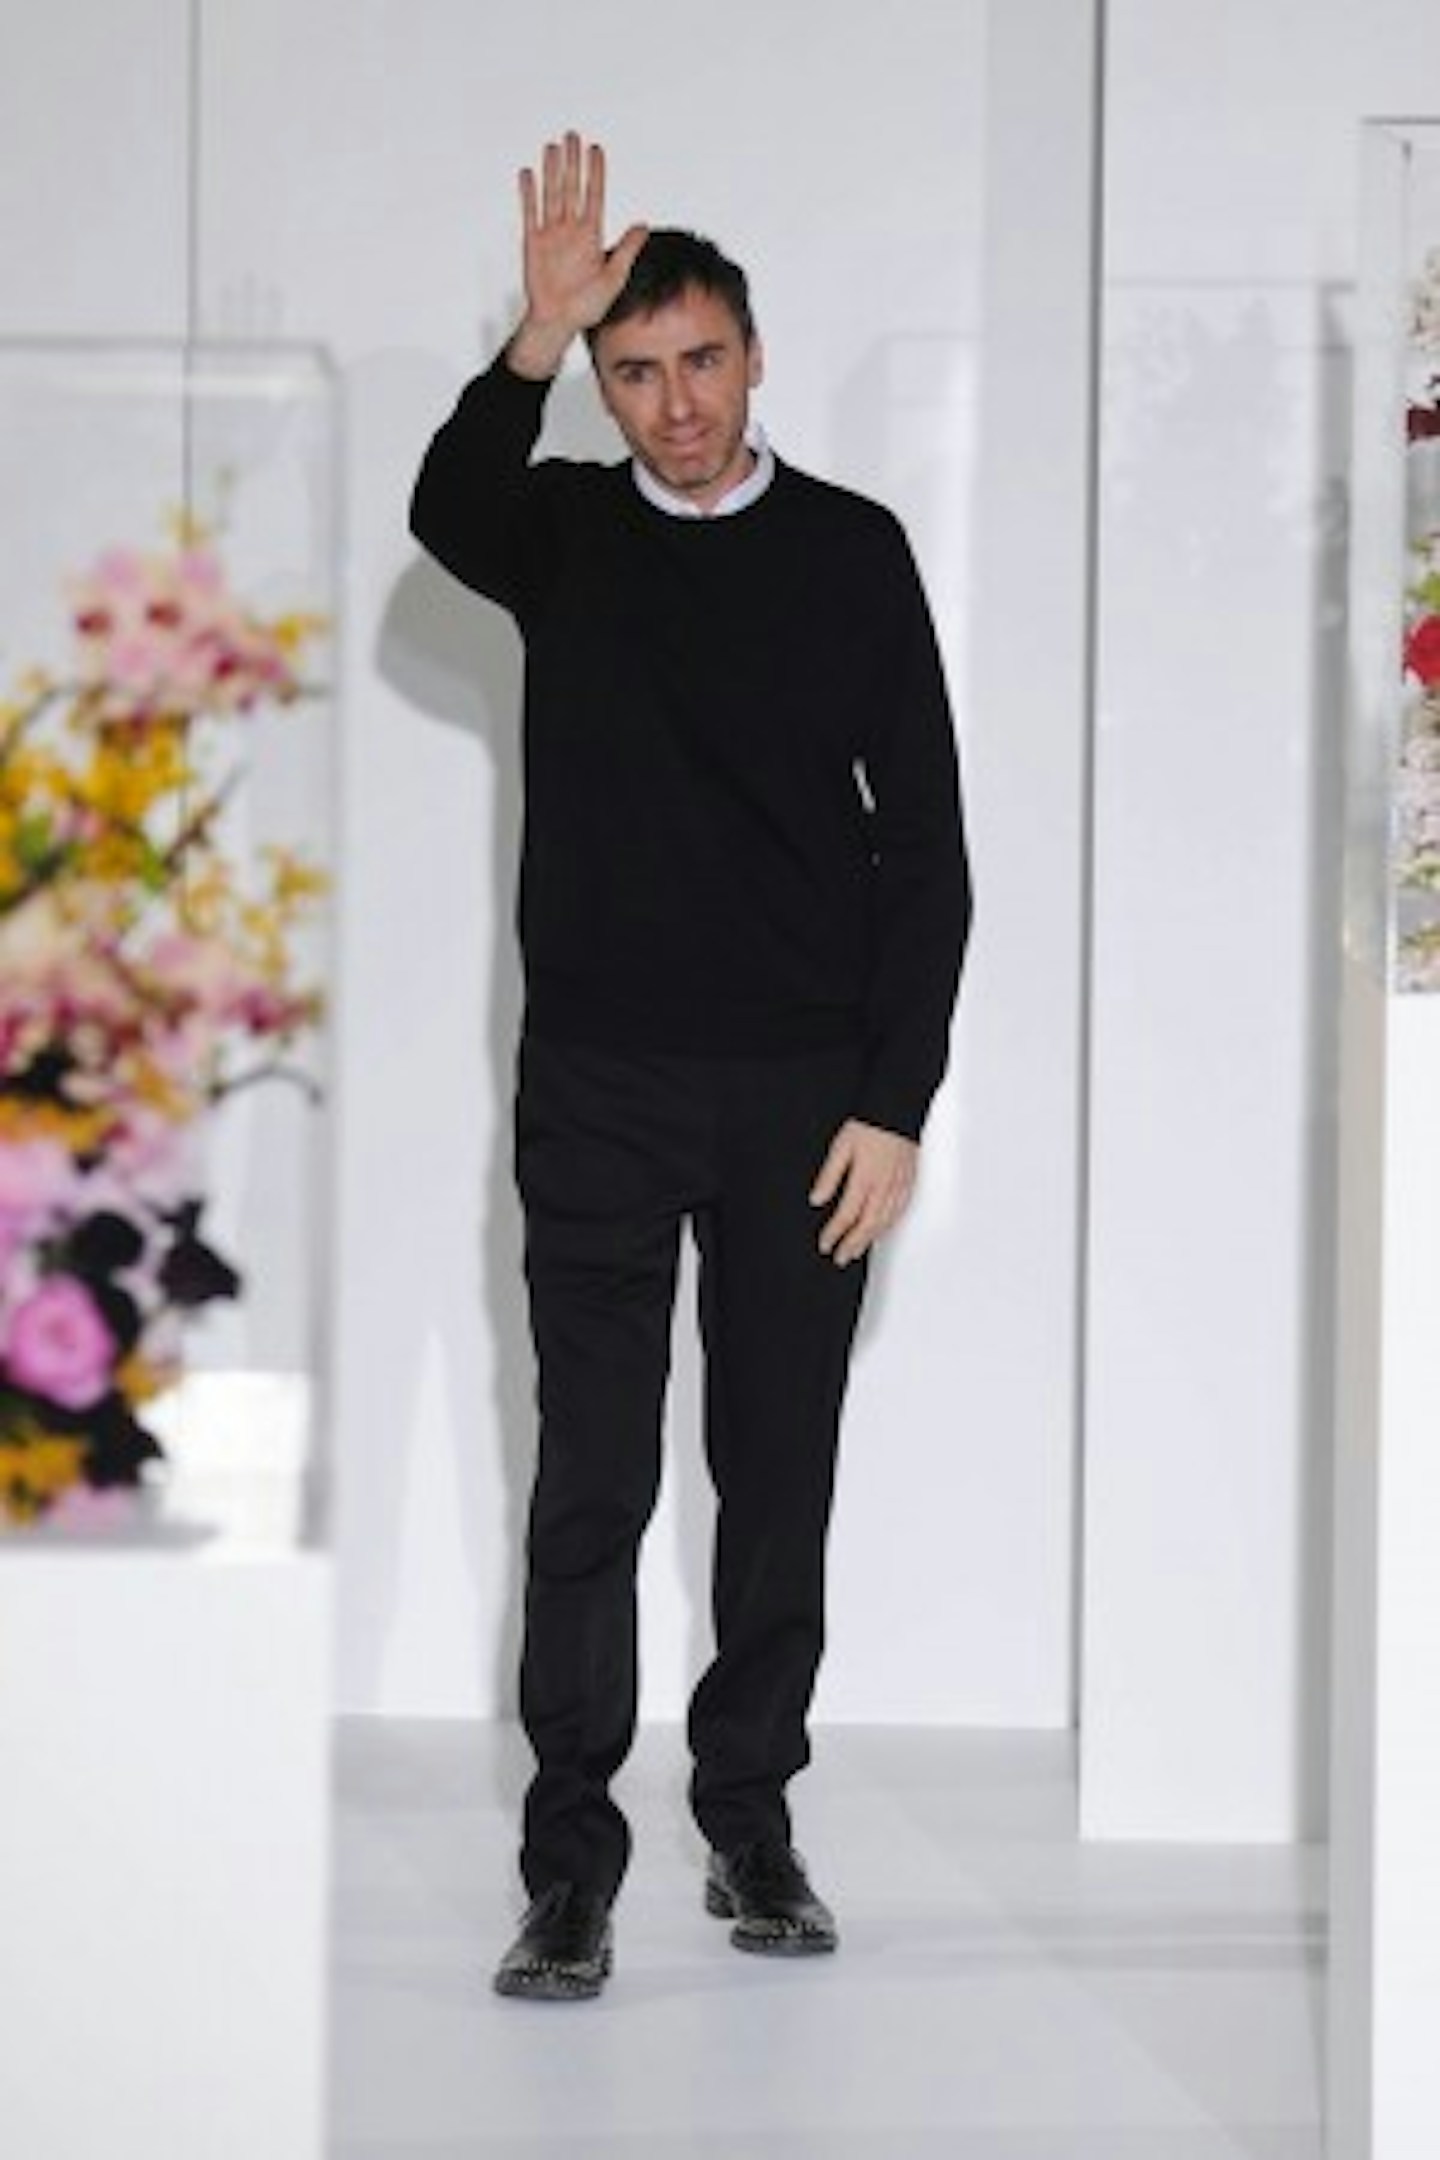 Raf Simons Named Creative Director of Dior